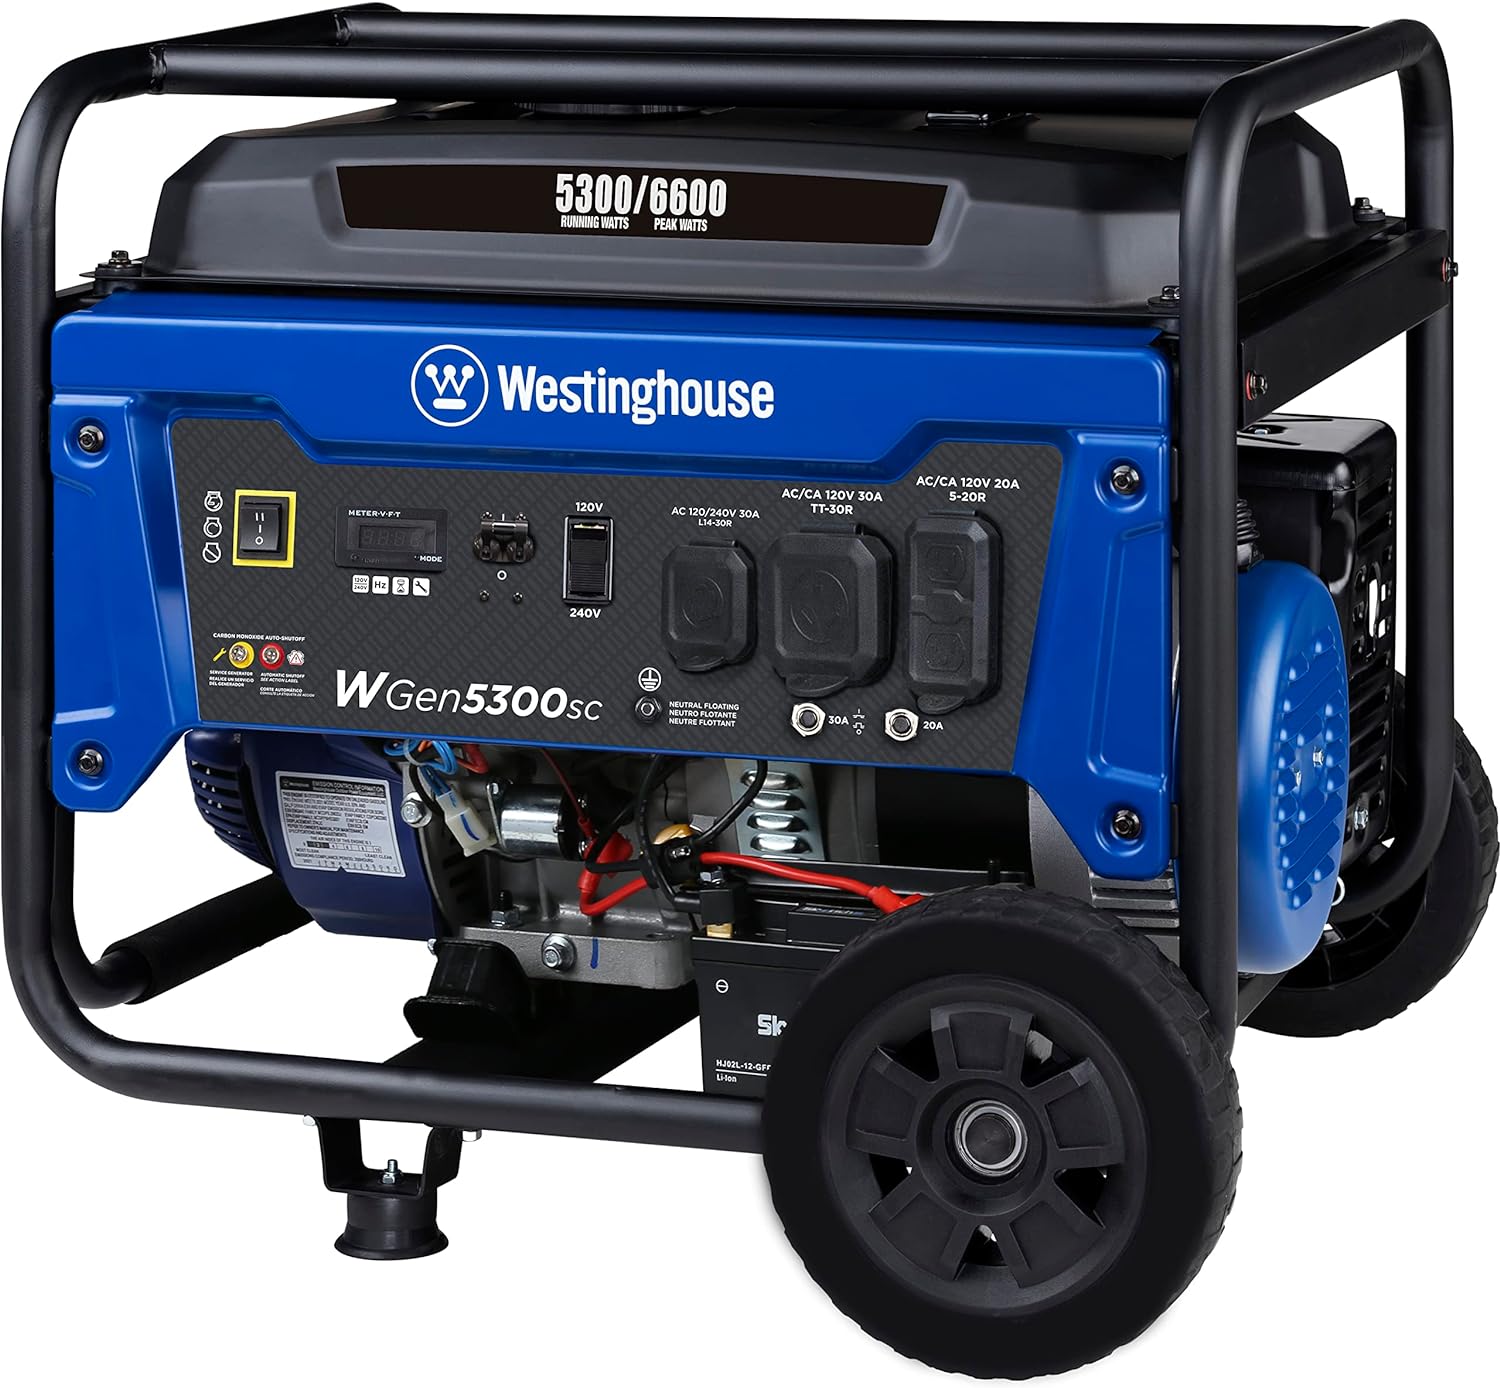 Westinghouse WGen5300sc Generator 5300W/6600W 30 Amp Electric Start Gas with CO Sensor New